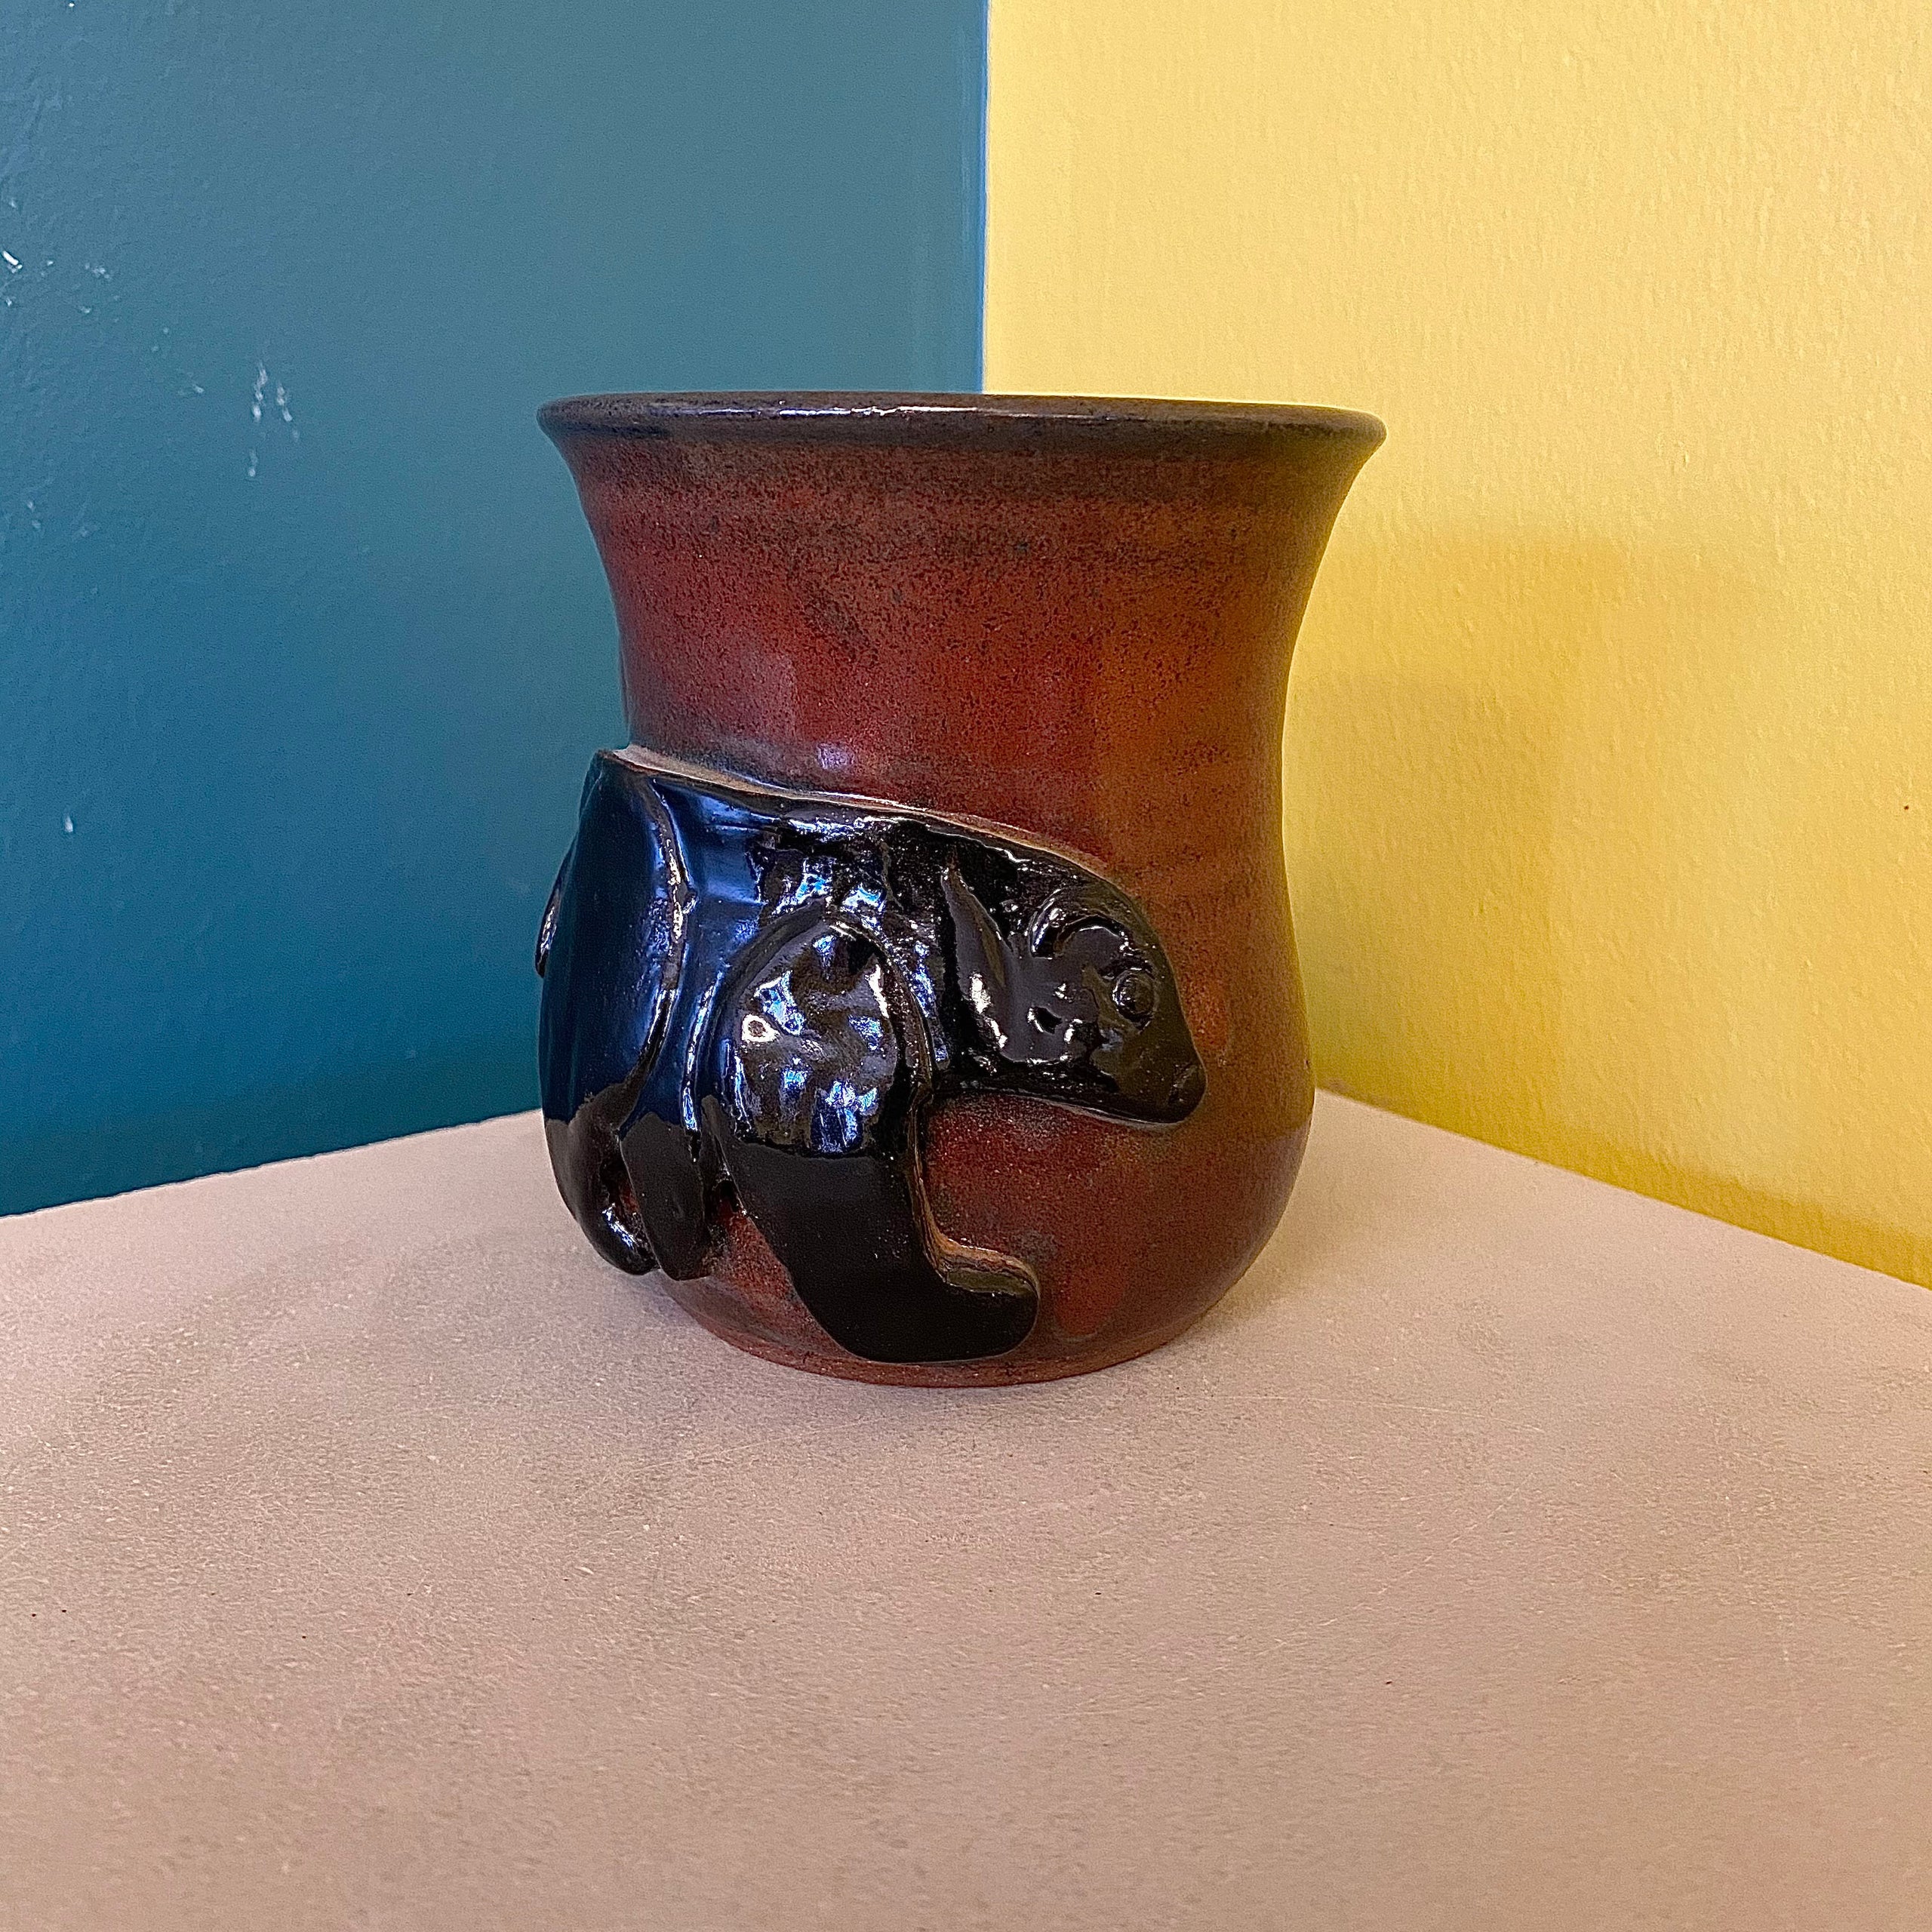 Mountain Bear Handmade Mug